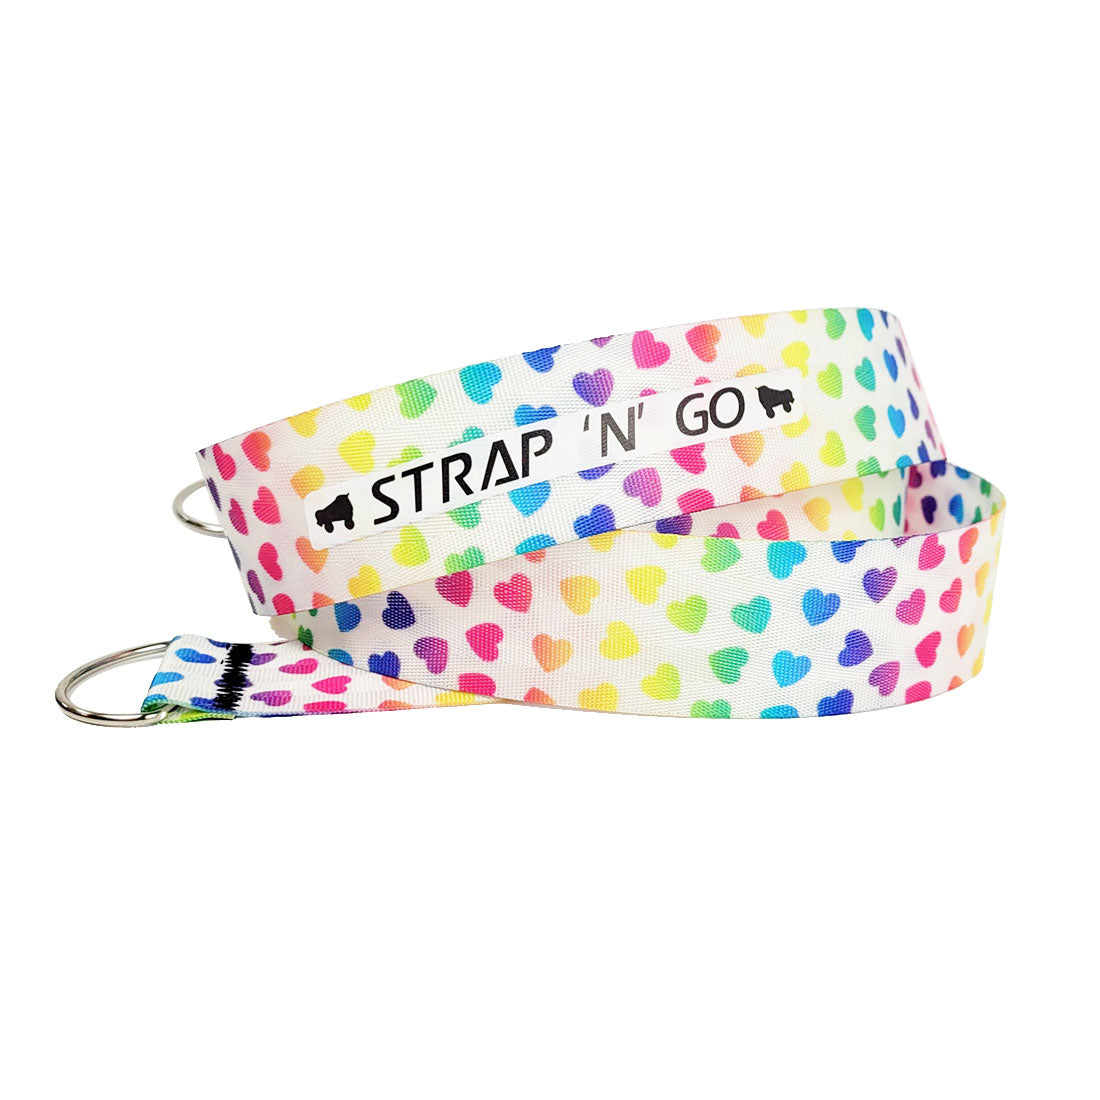 Strap N Go Skate Noose/Leash - Patterns Rainbow Hearts Roller Skate Accessories